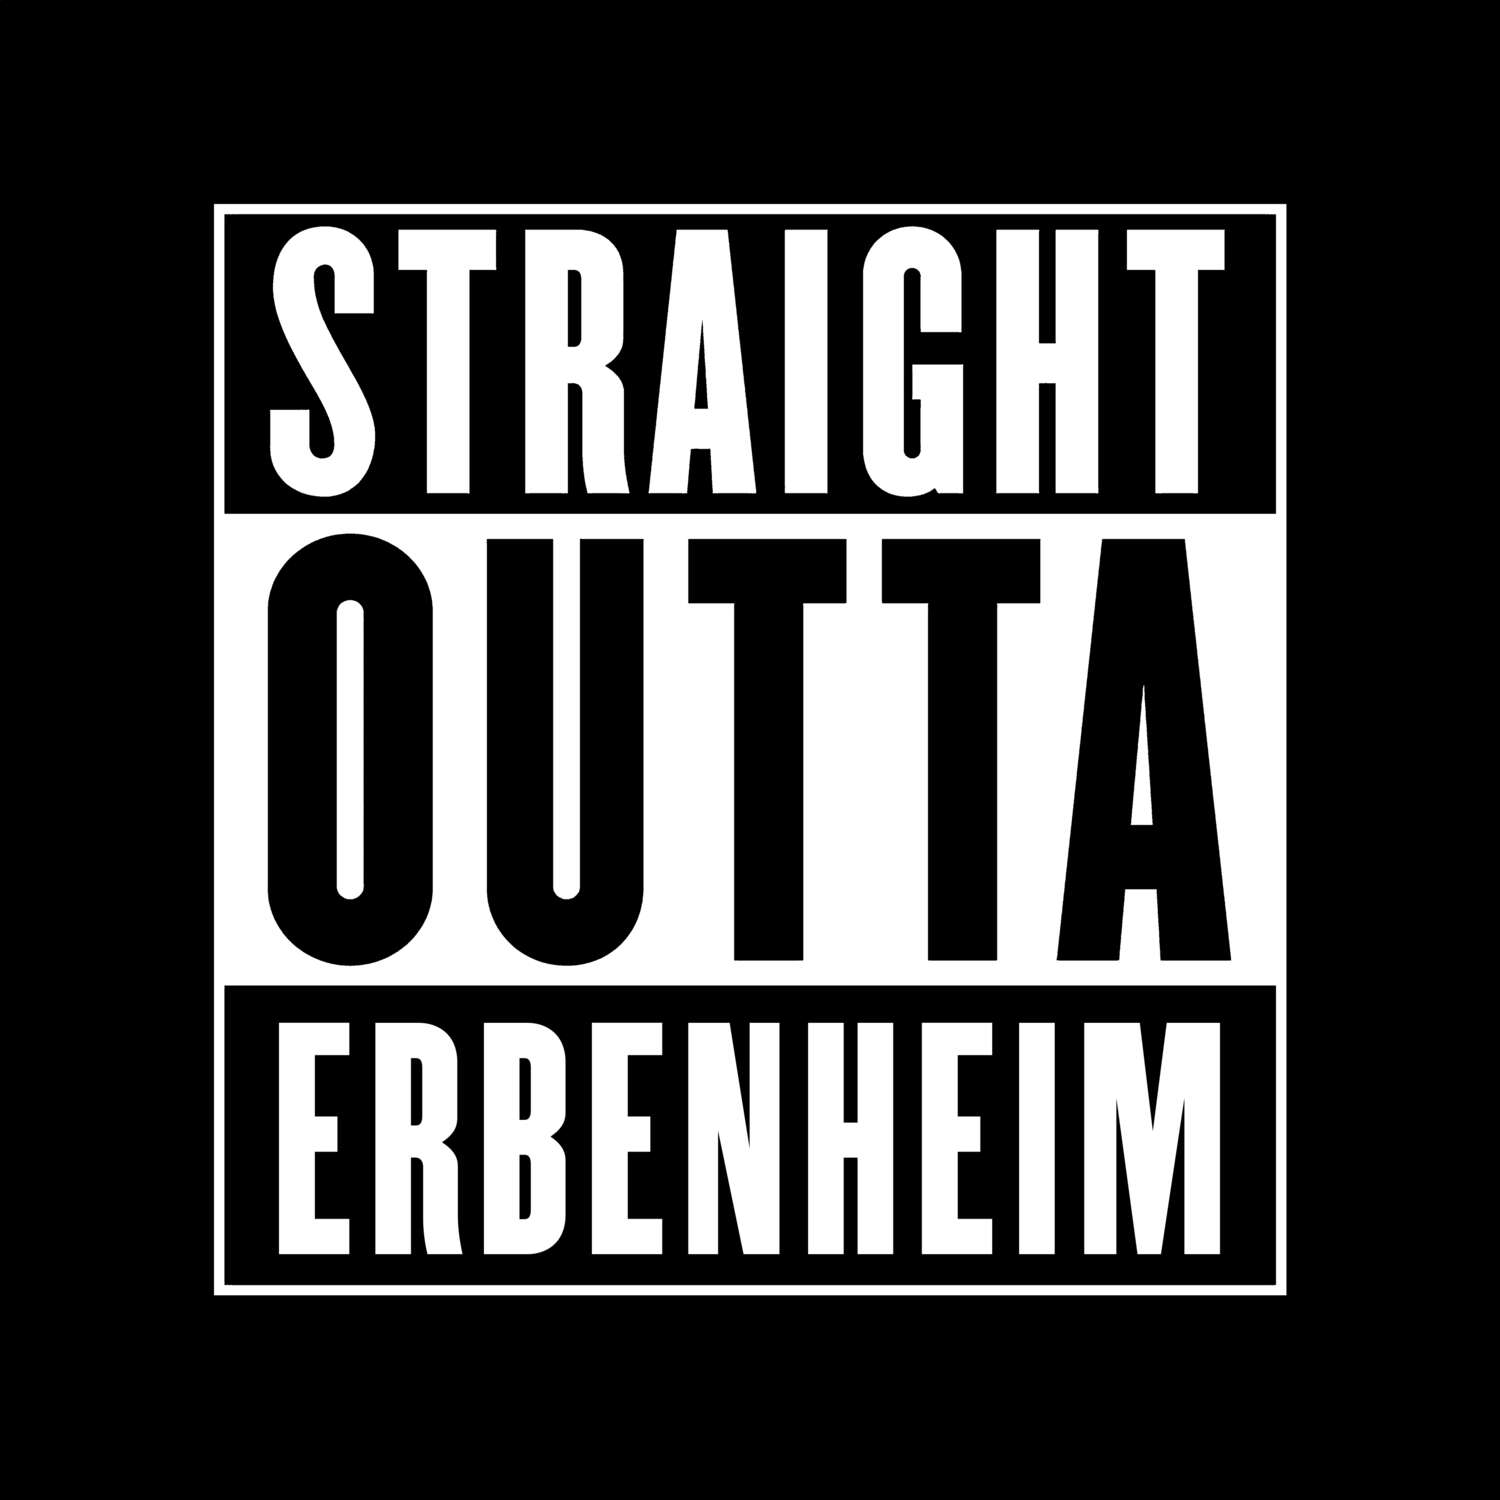 Erbenheim T-Shirt »Straight Outta«